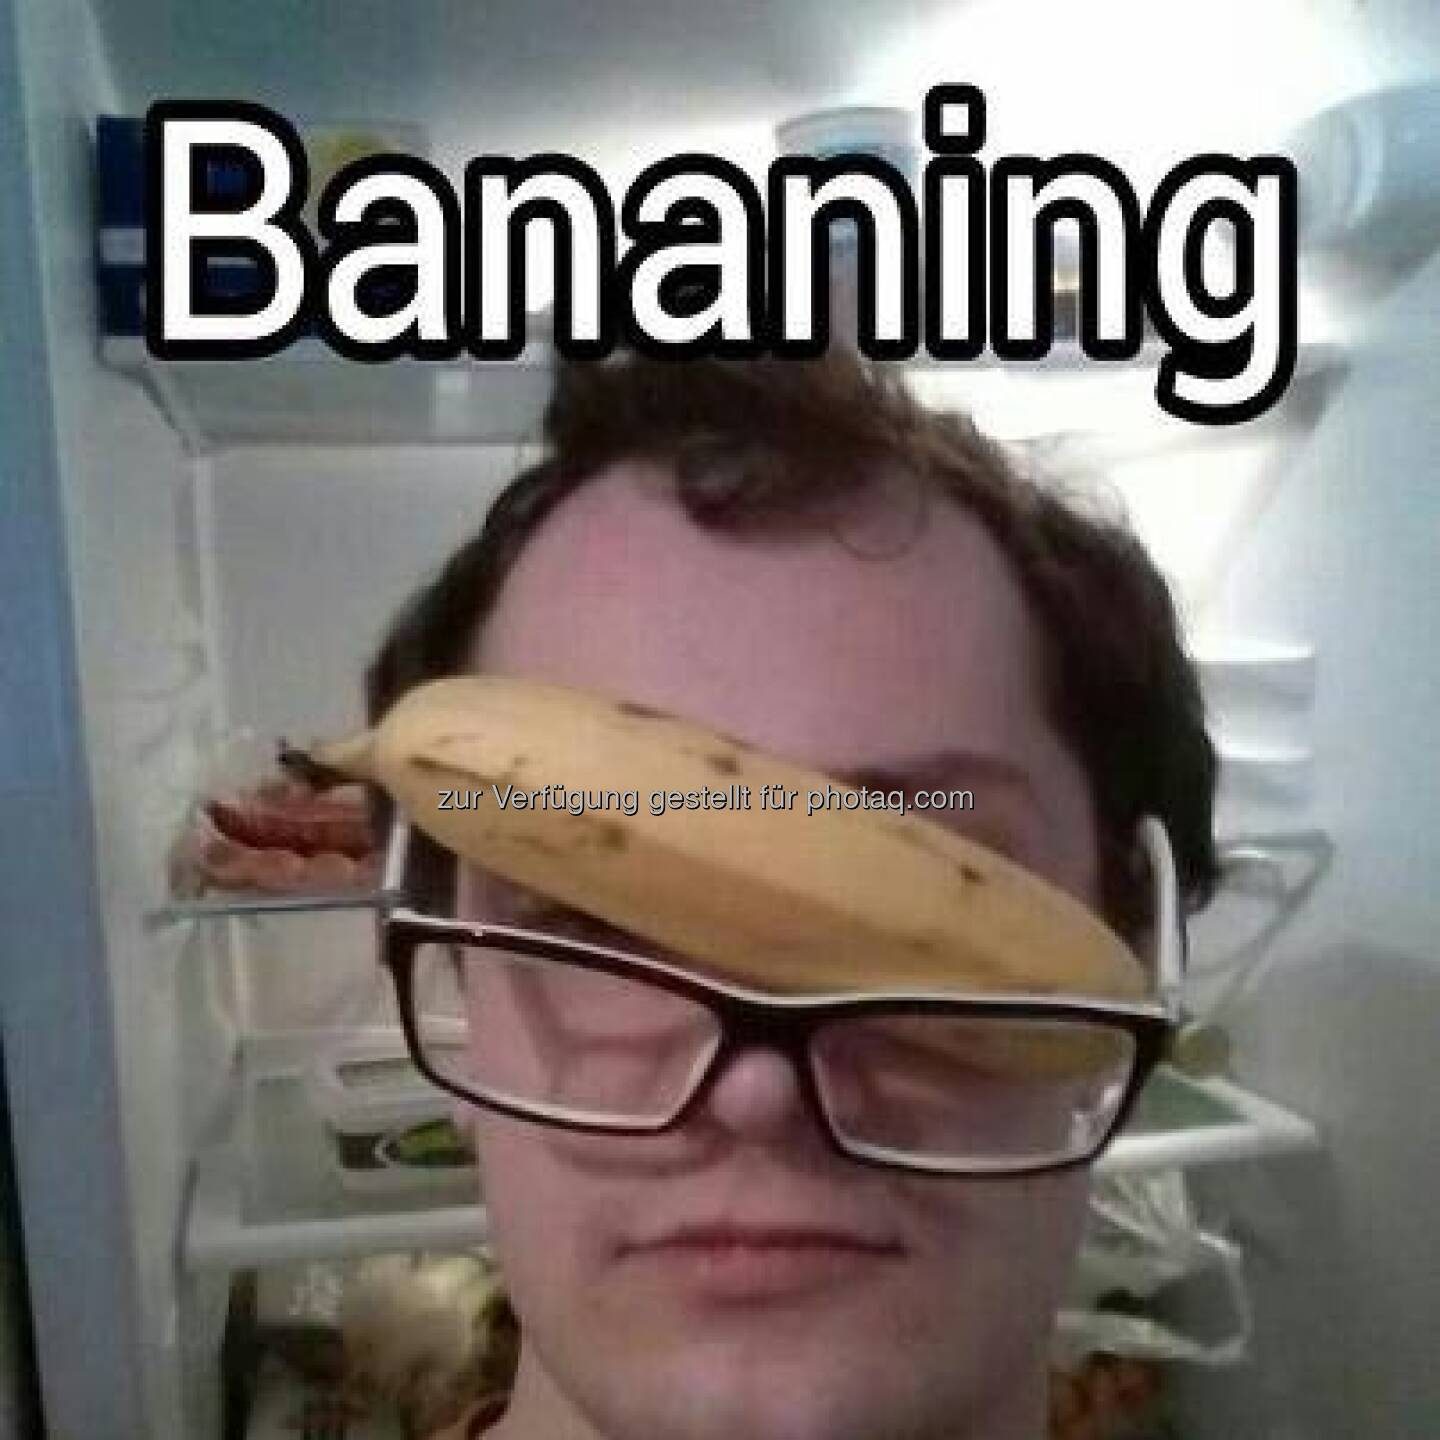 Bananing https://www.facebook.com/bananingofficial